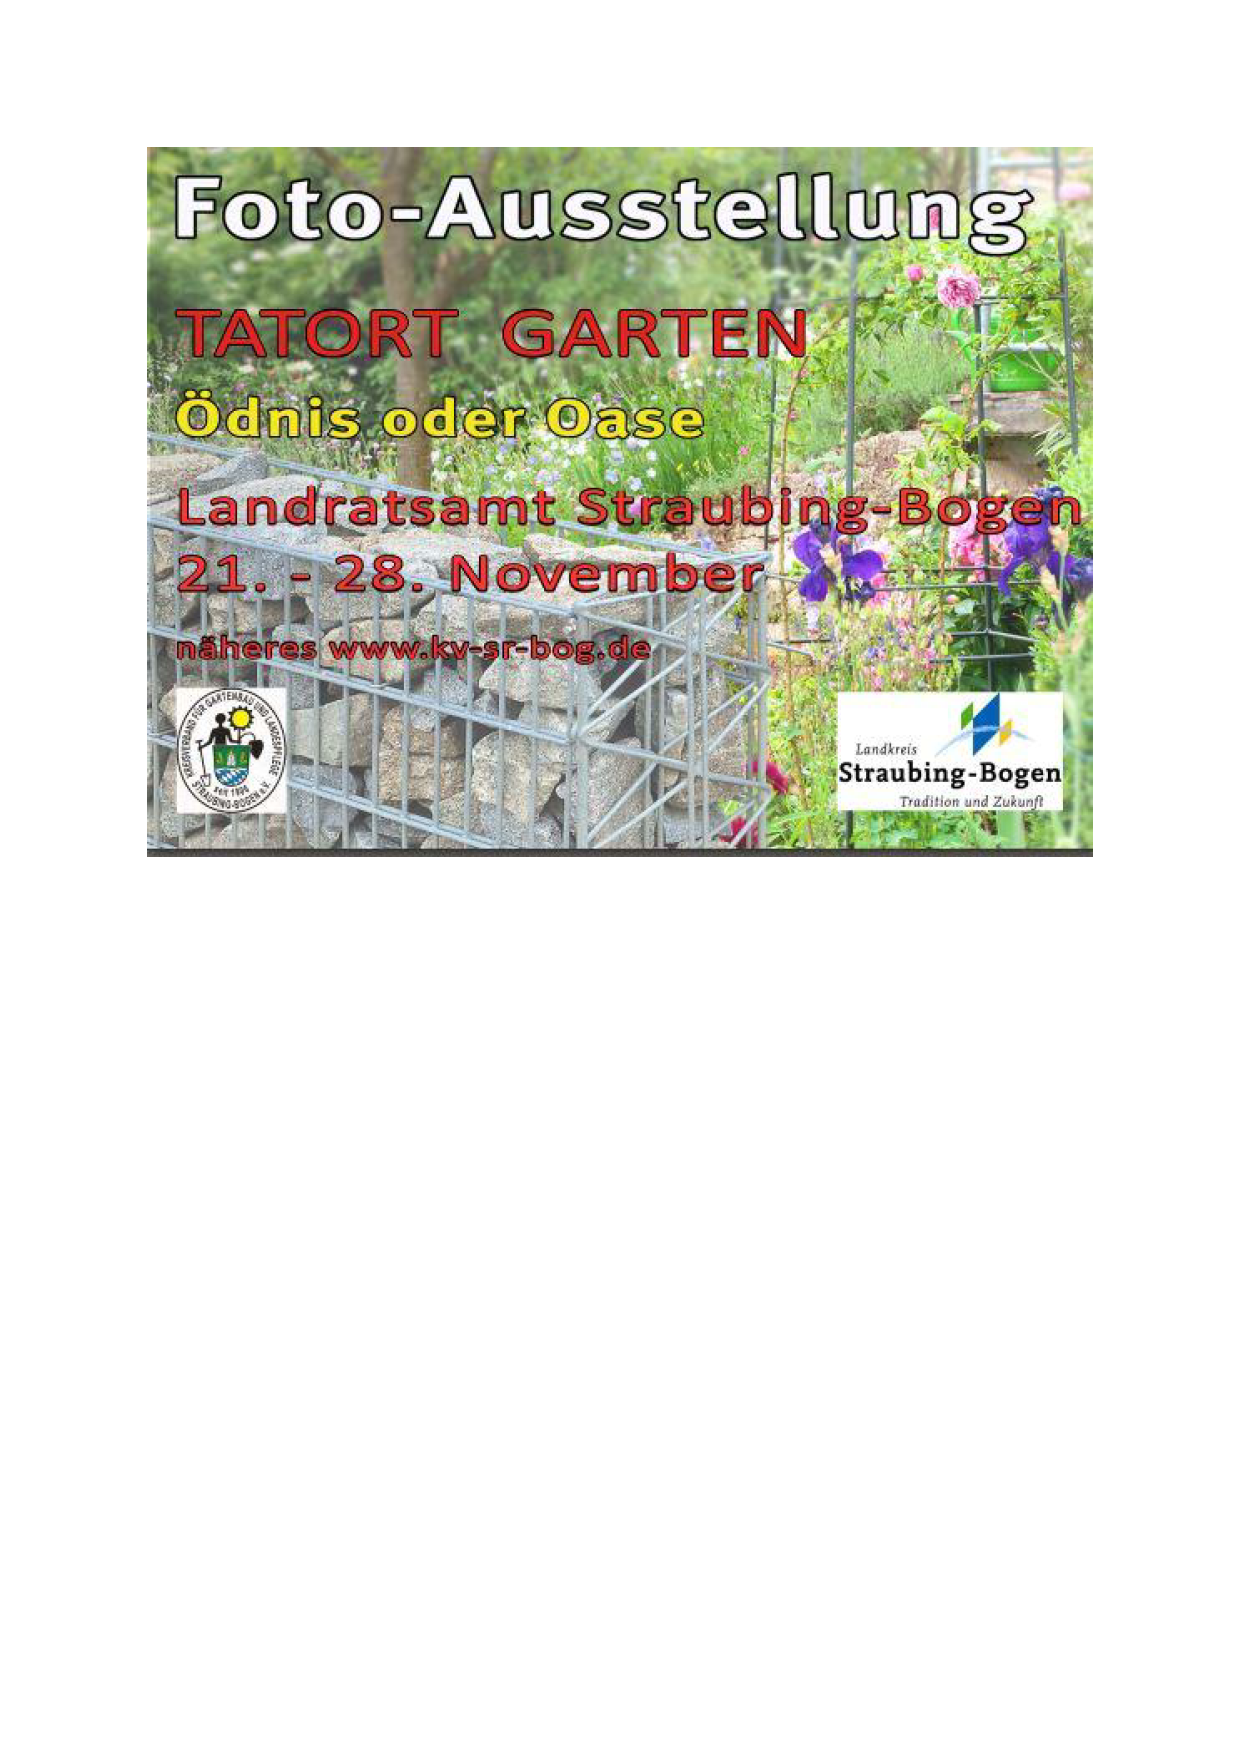 Tatort Garten: Ausstellung im Foyer des Landratsamtes ab Donnerstag, 21. November